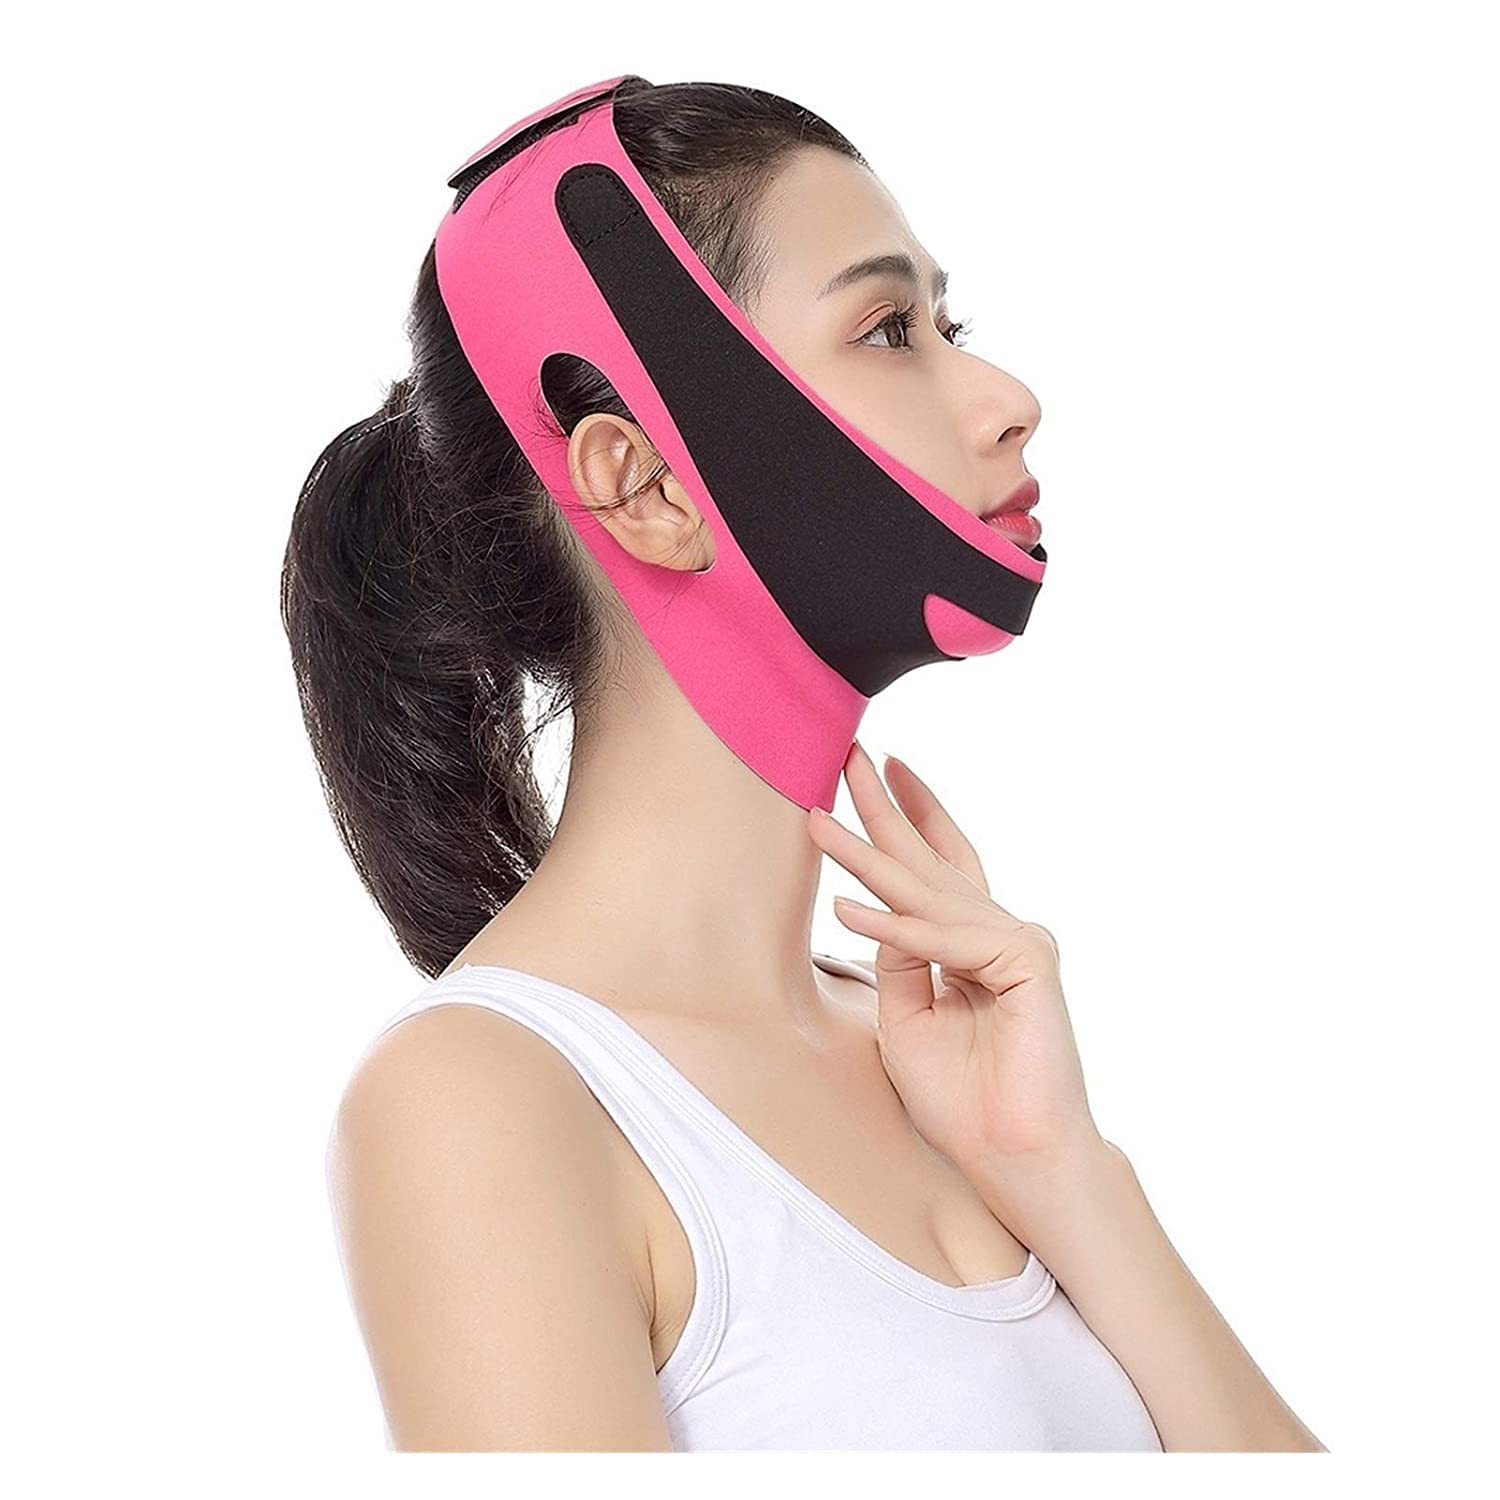 ParaFaciem Reusable V Line lifting Mask Facial Slimming Strap